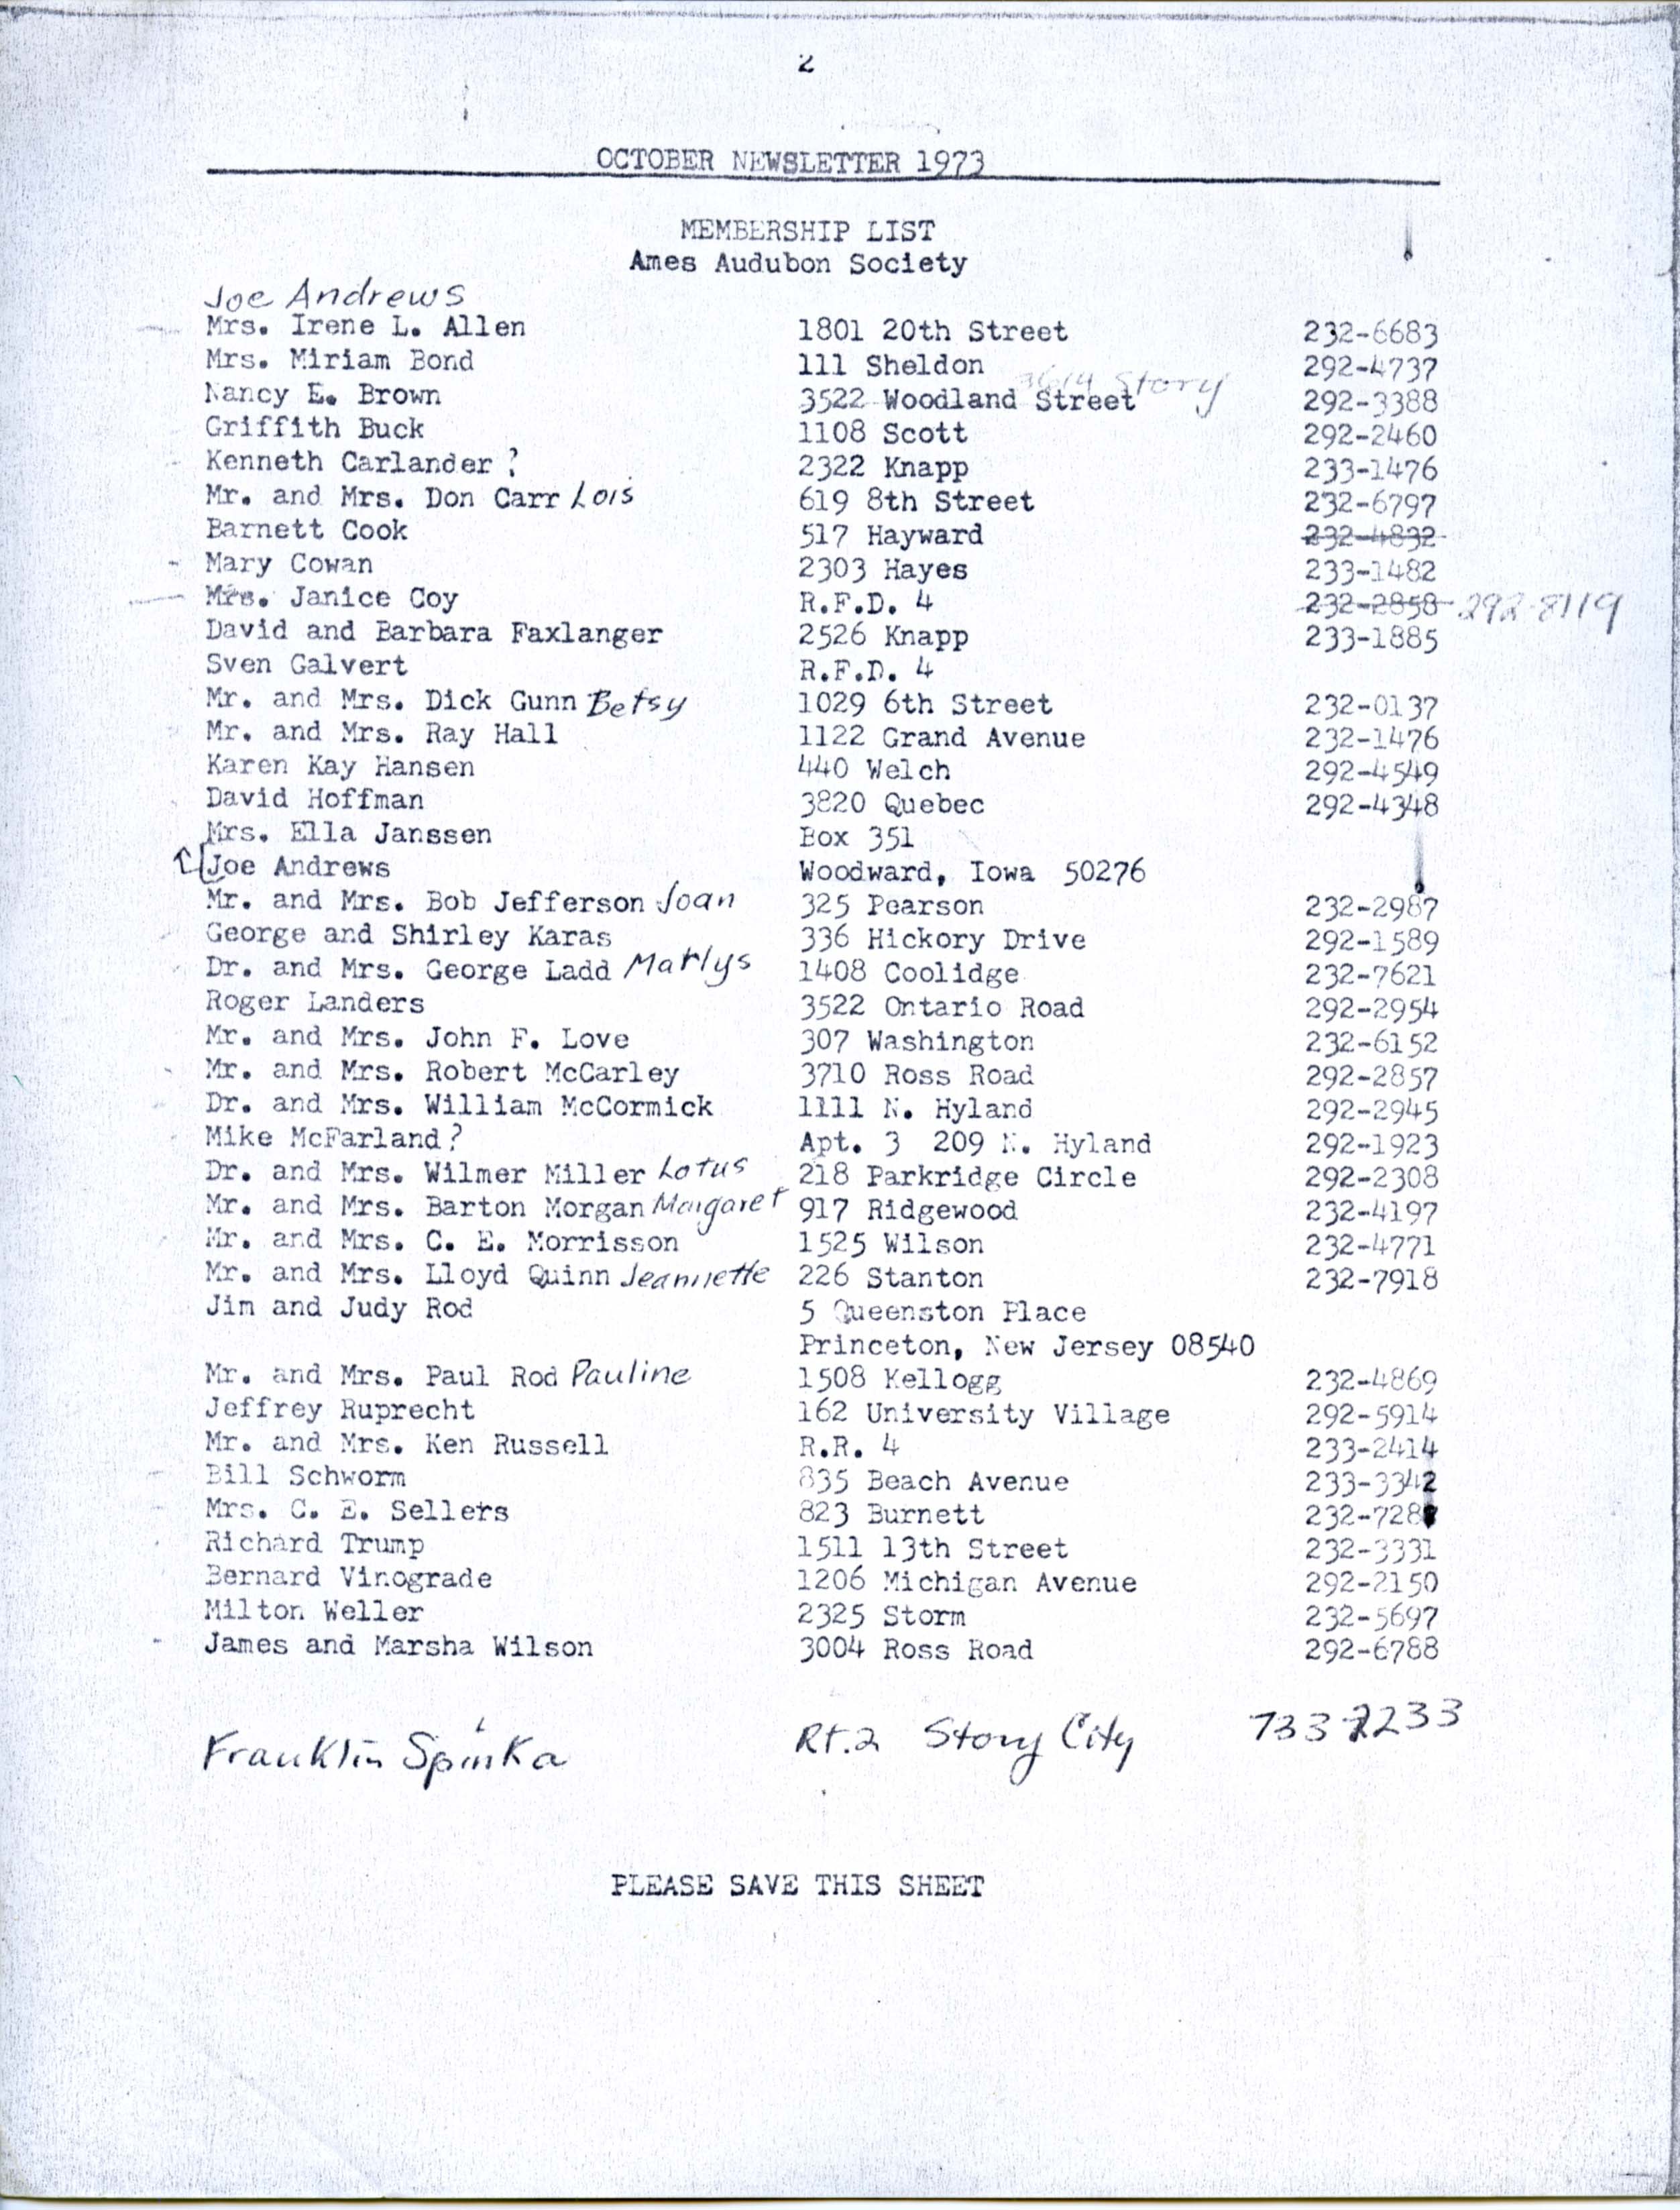 Ames Audubon Society membership list, October 1973